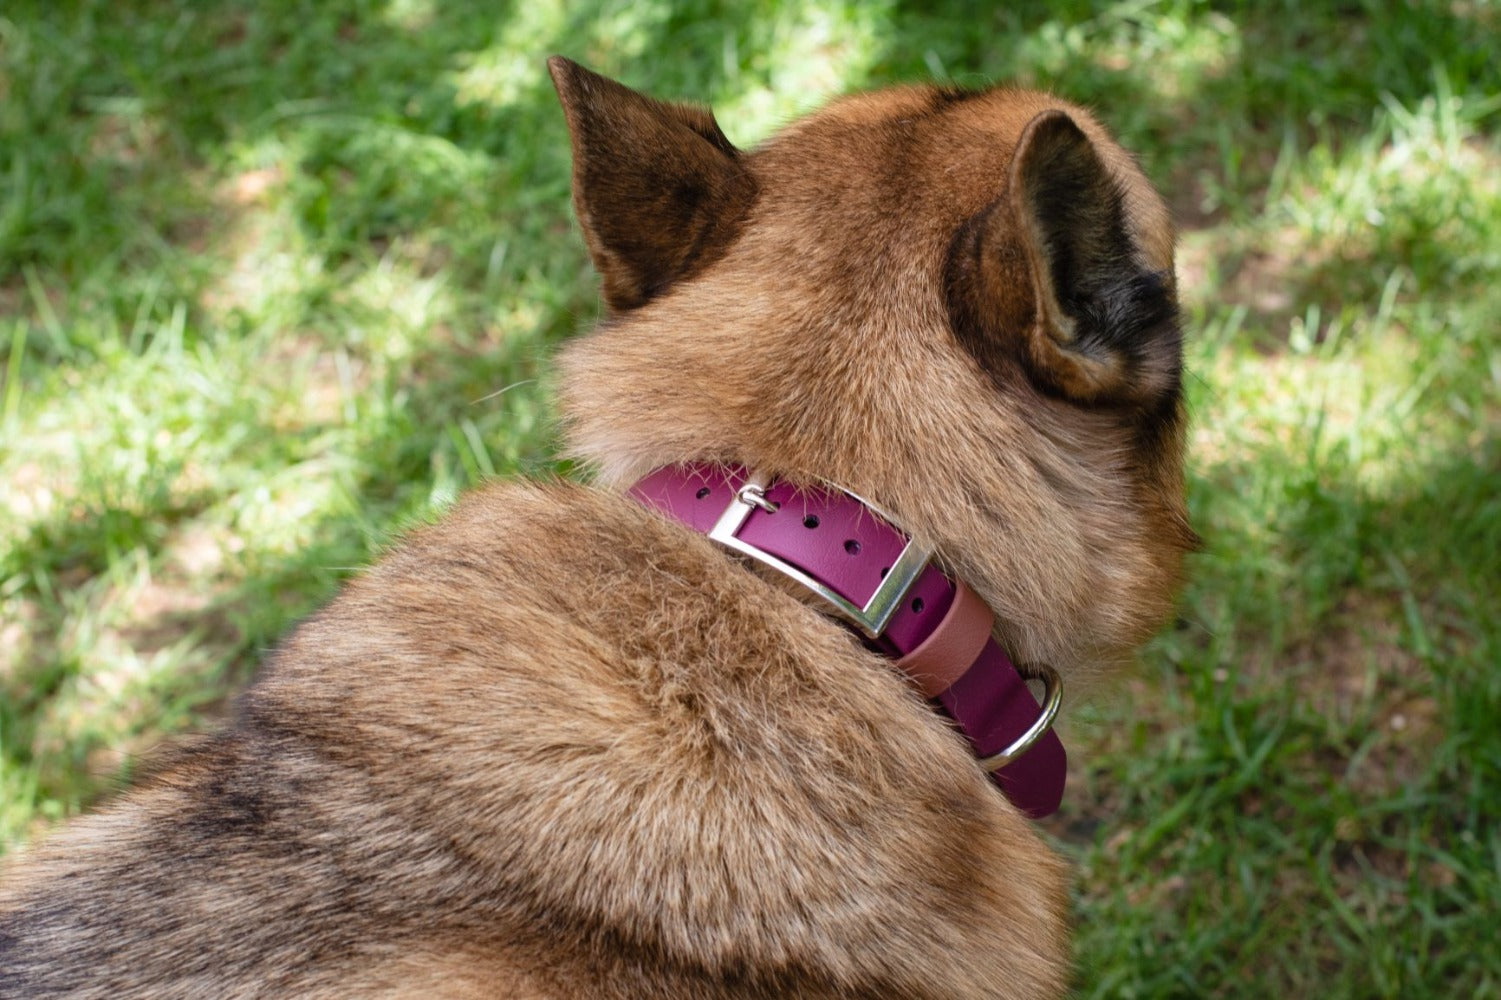 Backwoods Dog BioThane Buckle Martingale dog collar and hands-free leash on Husky dog